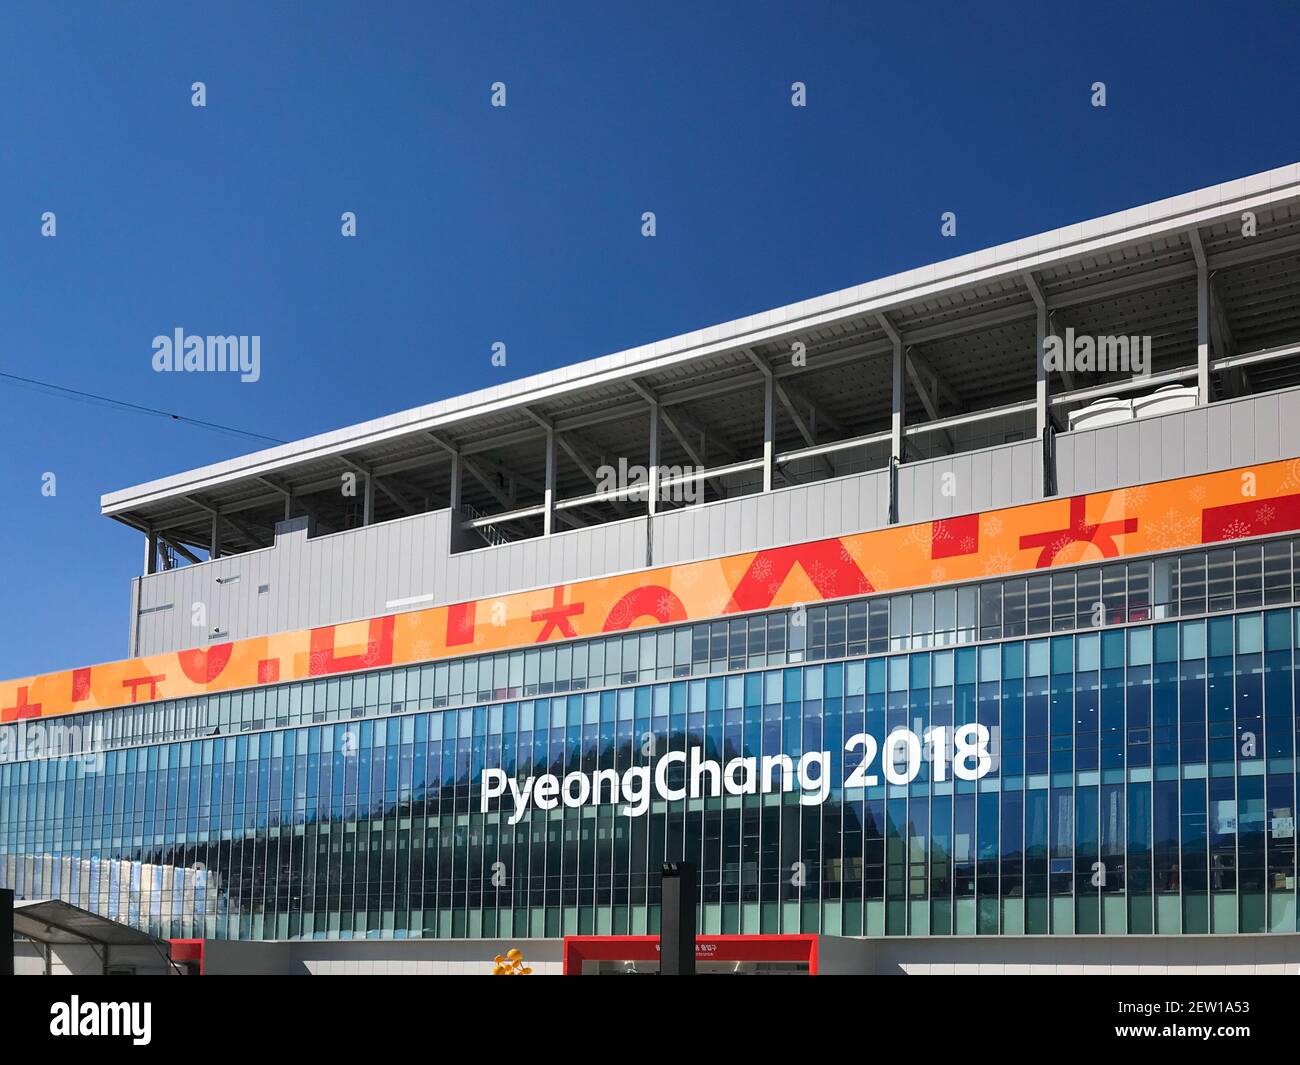 Pyeongchang, South Korea - February 6, 2018: Facade of Pyeongchang Olympic Stadium Stock Photo